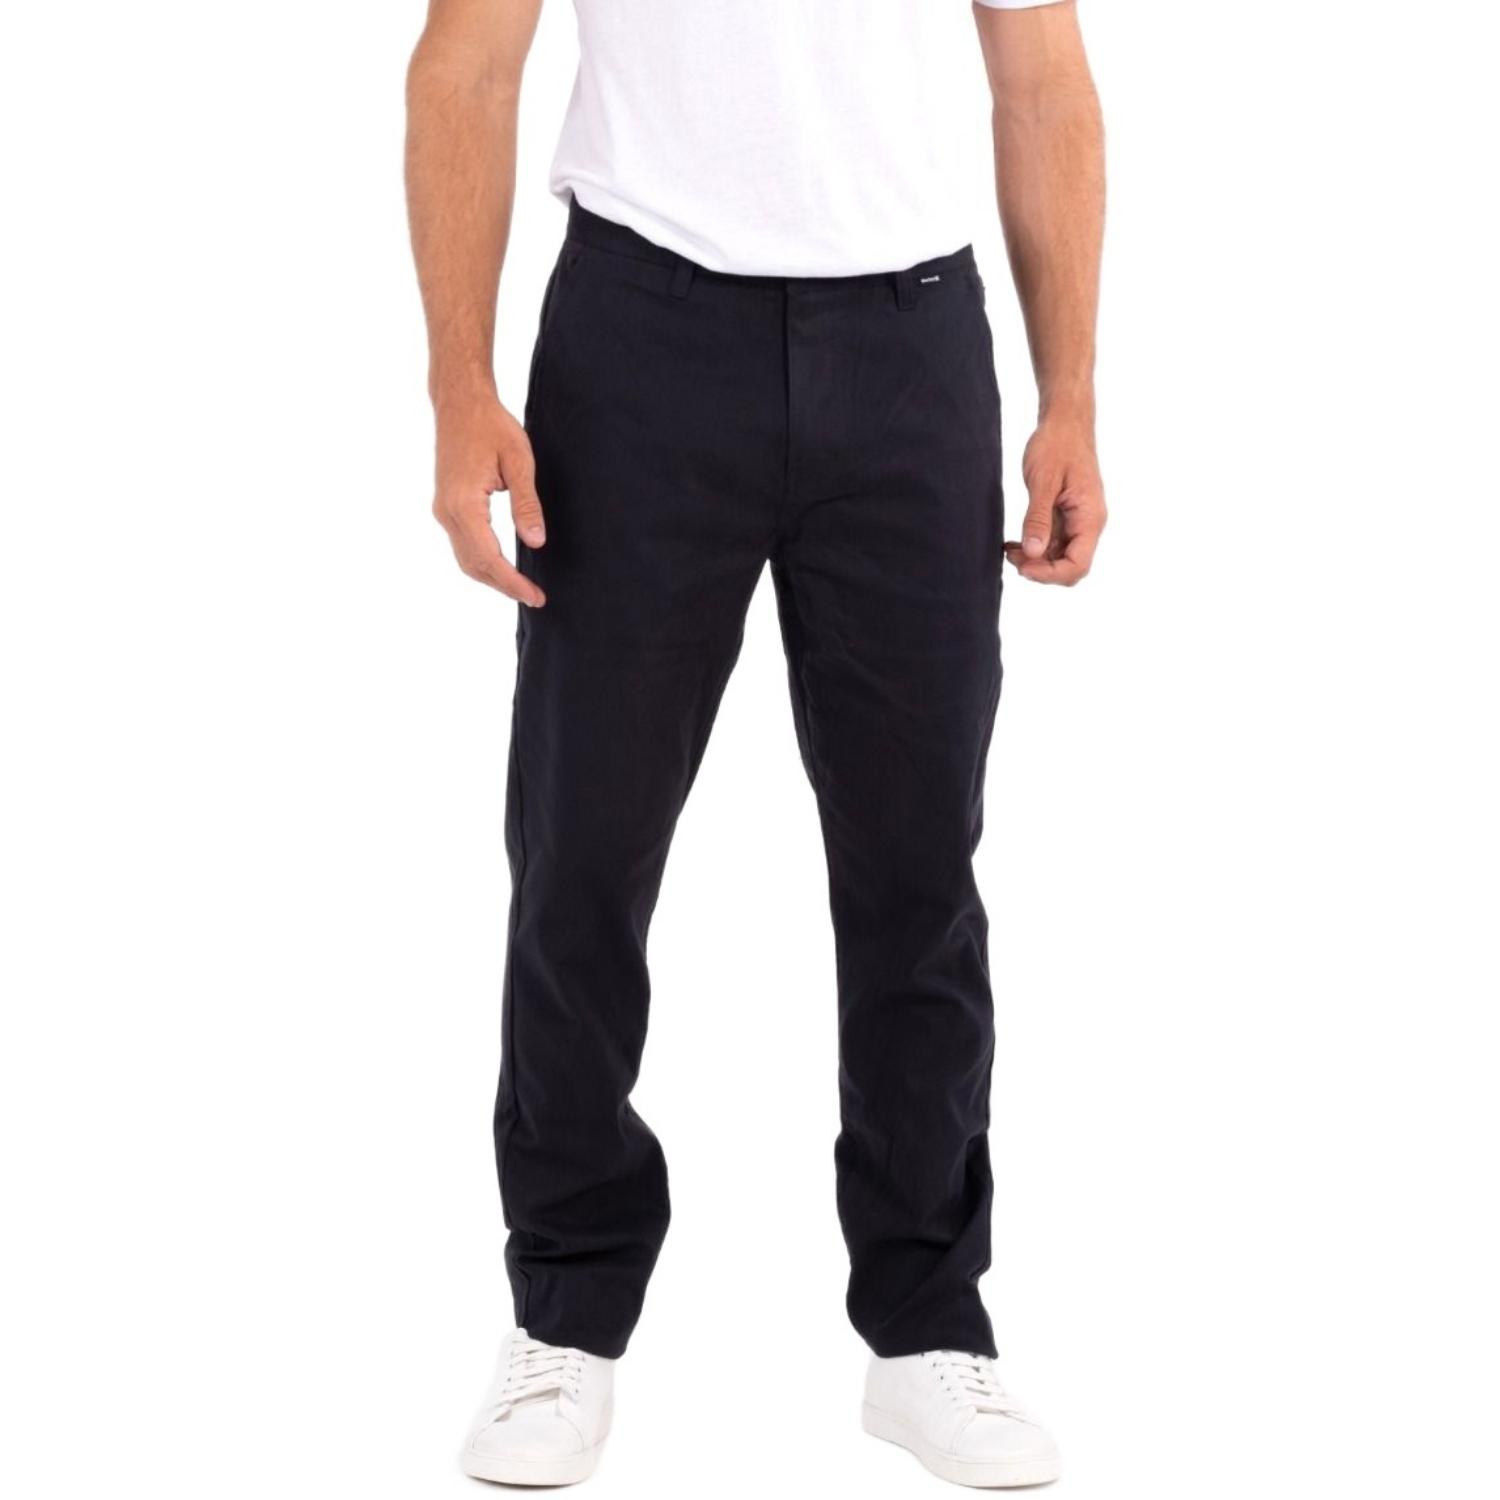 Hurley Dri Worker Chino Pants/Trousers - Black - Mens Chino Pants/Trousers by Hurley